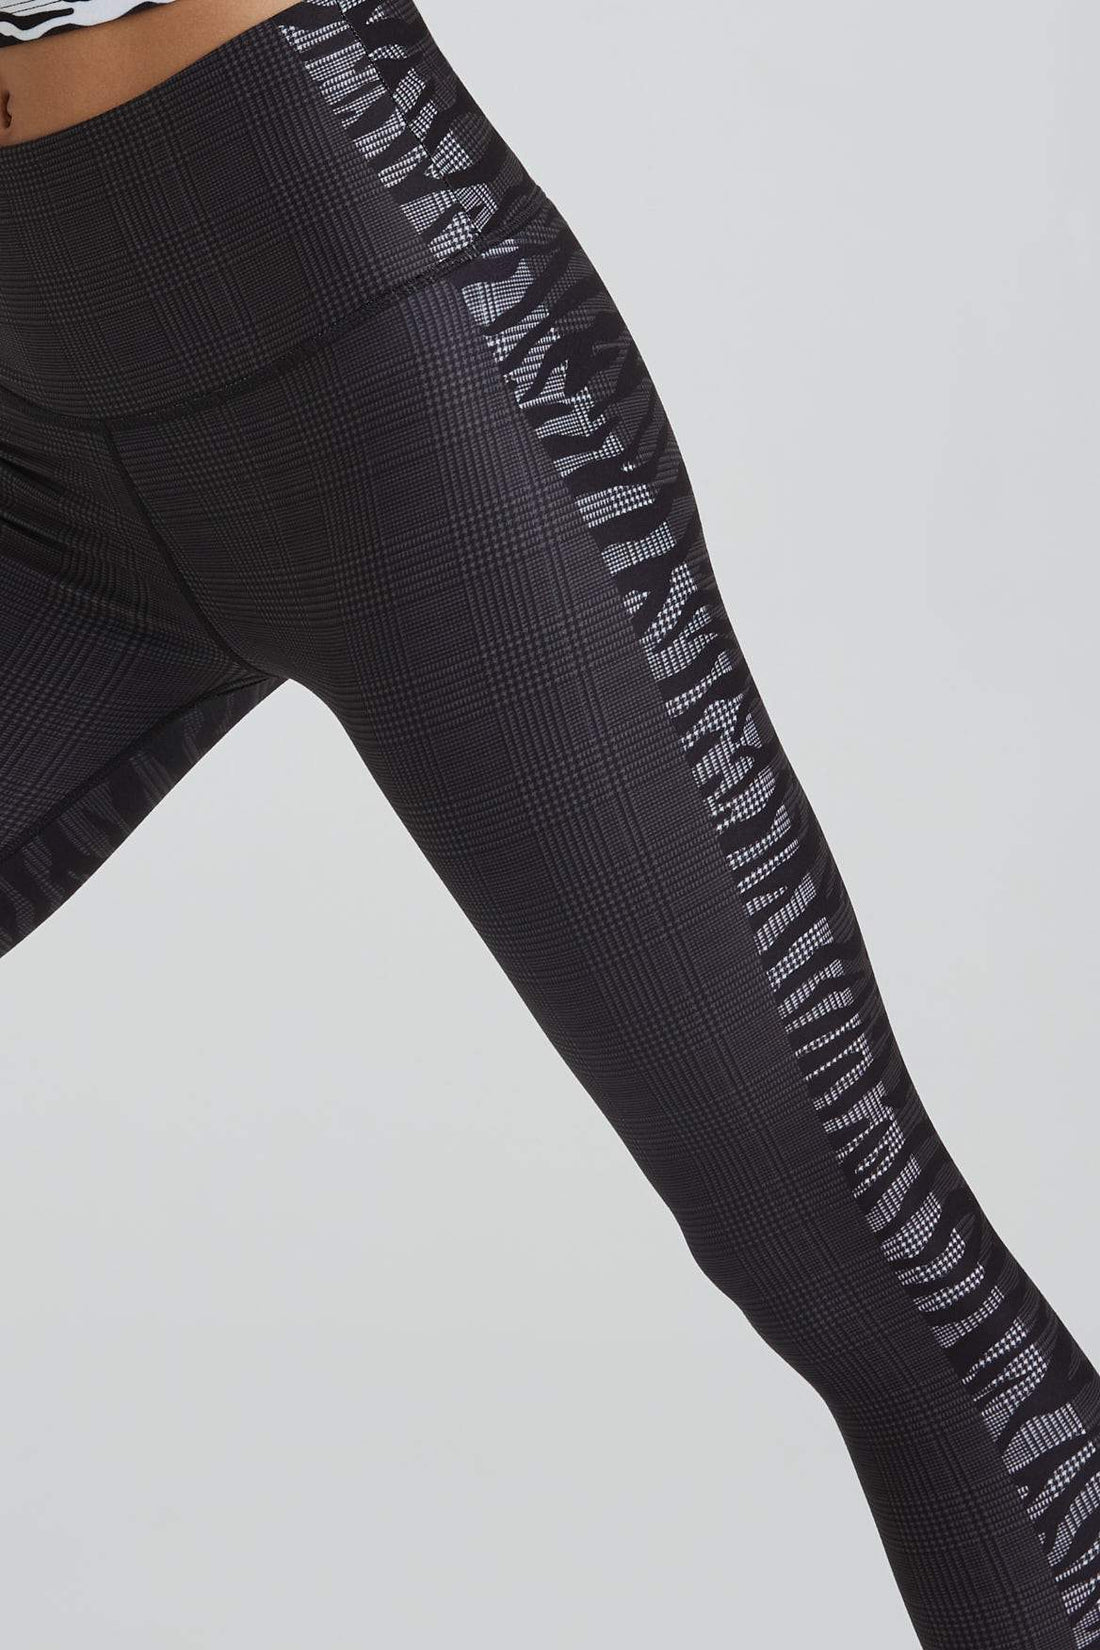 Nike One Womens Power Flash Running Tights CN9880-010 Black-Size